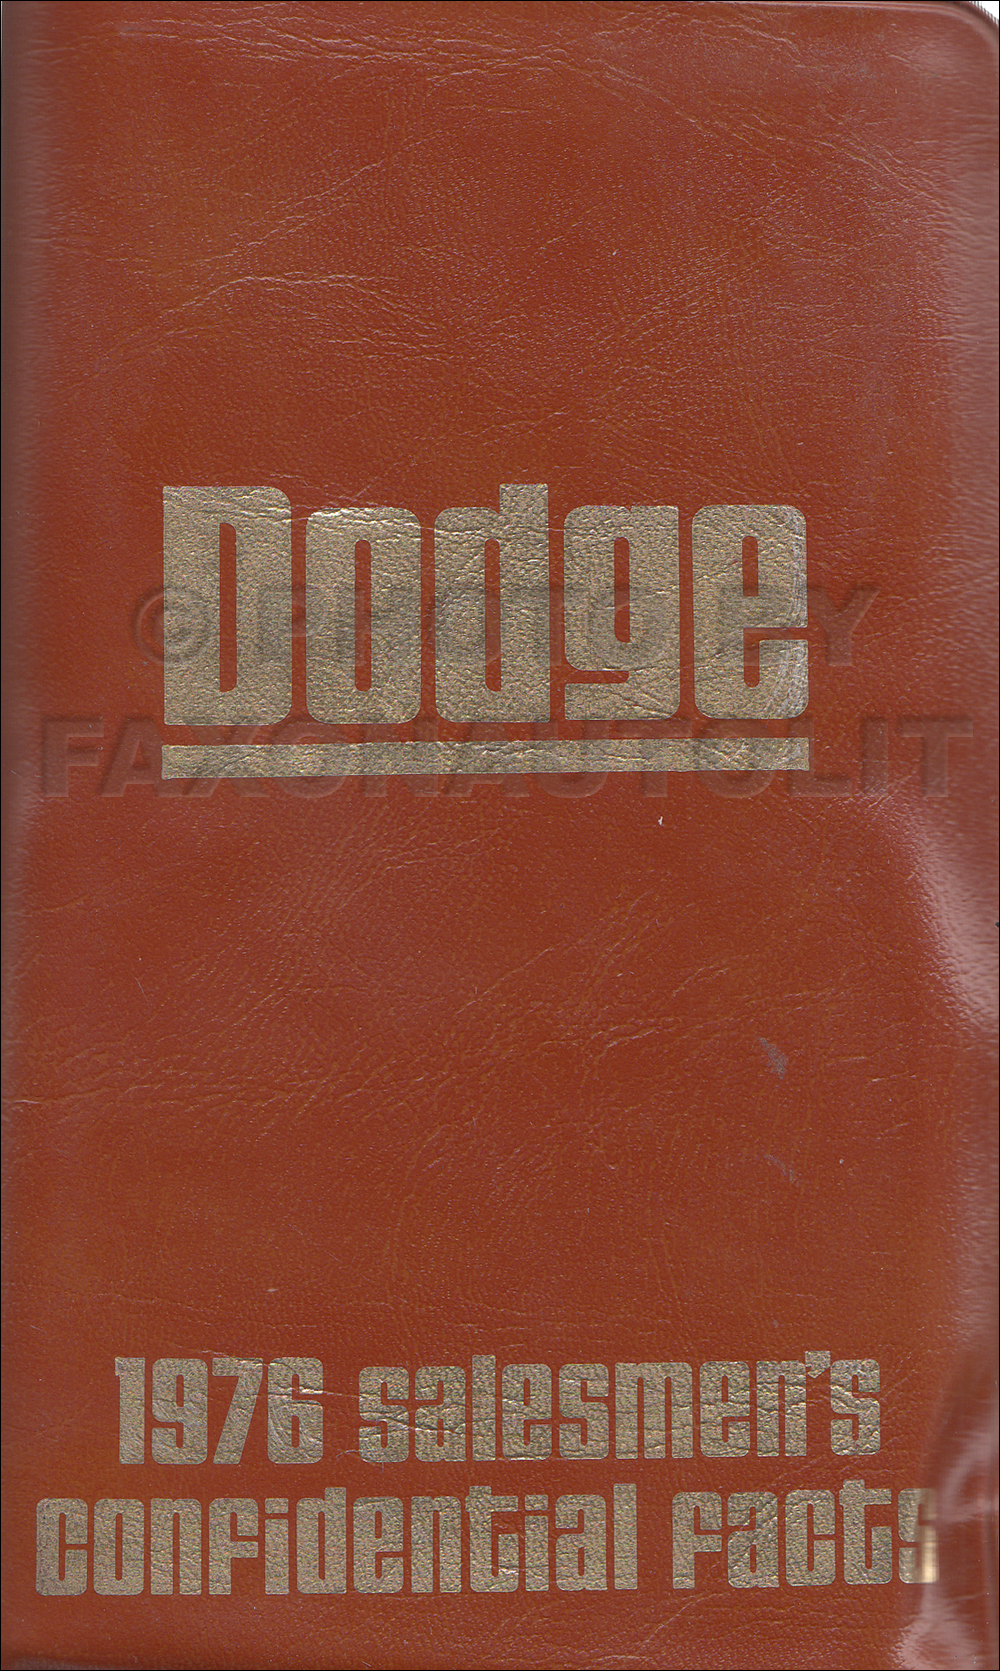 1976 Dodge Pocket Size Salesmen's Confidential Facts Guide Original